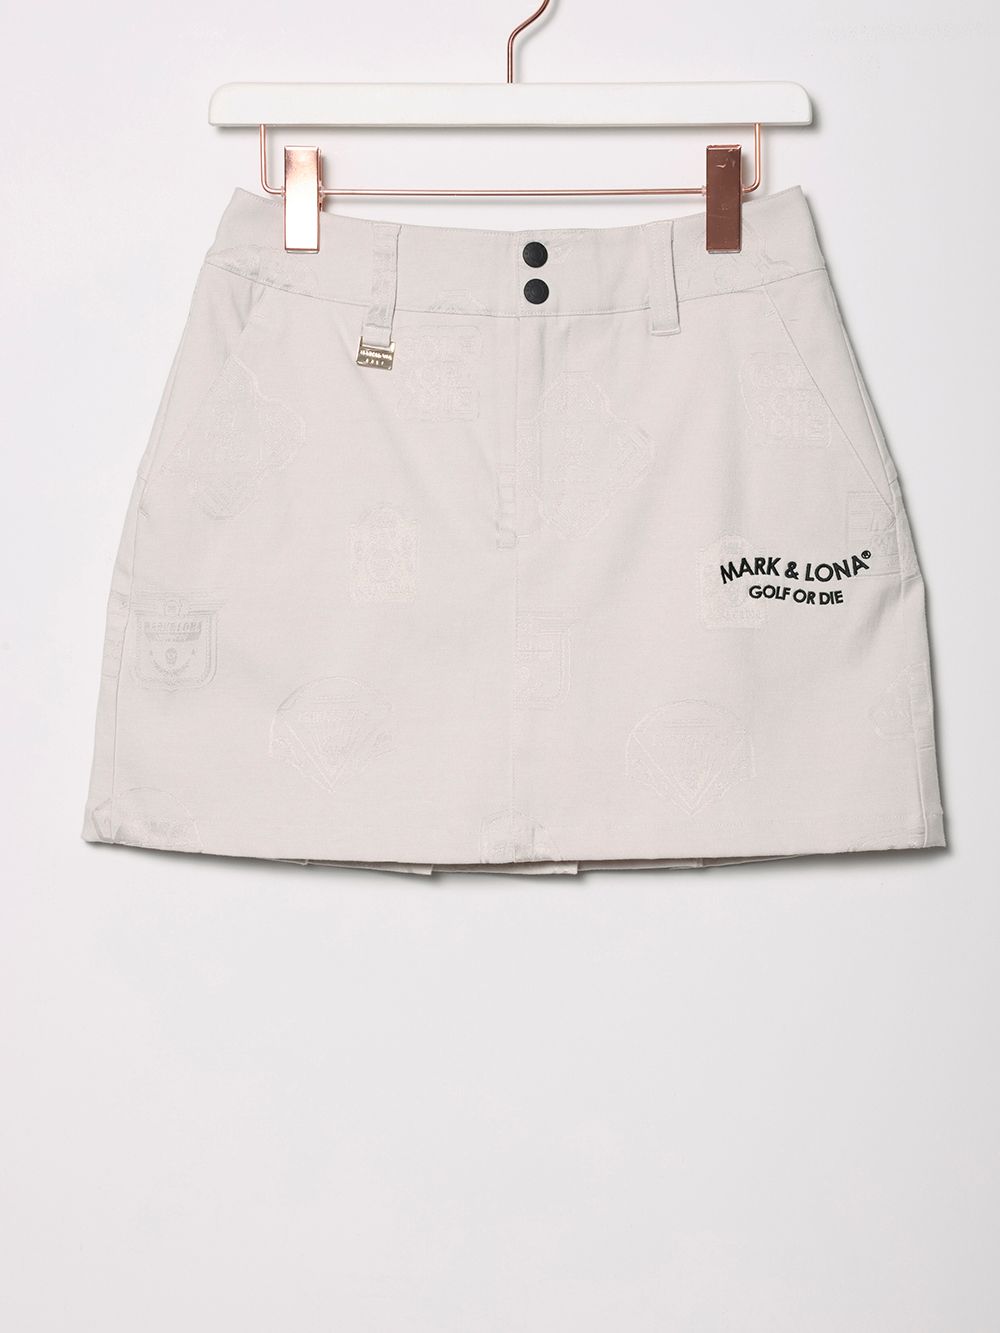 Annex Trapeze Skirt | スカート | イエロー | レディース | ゴルフウェア - 36 (S)